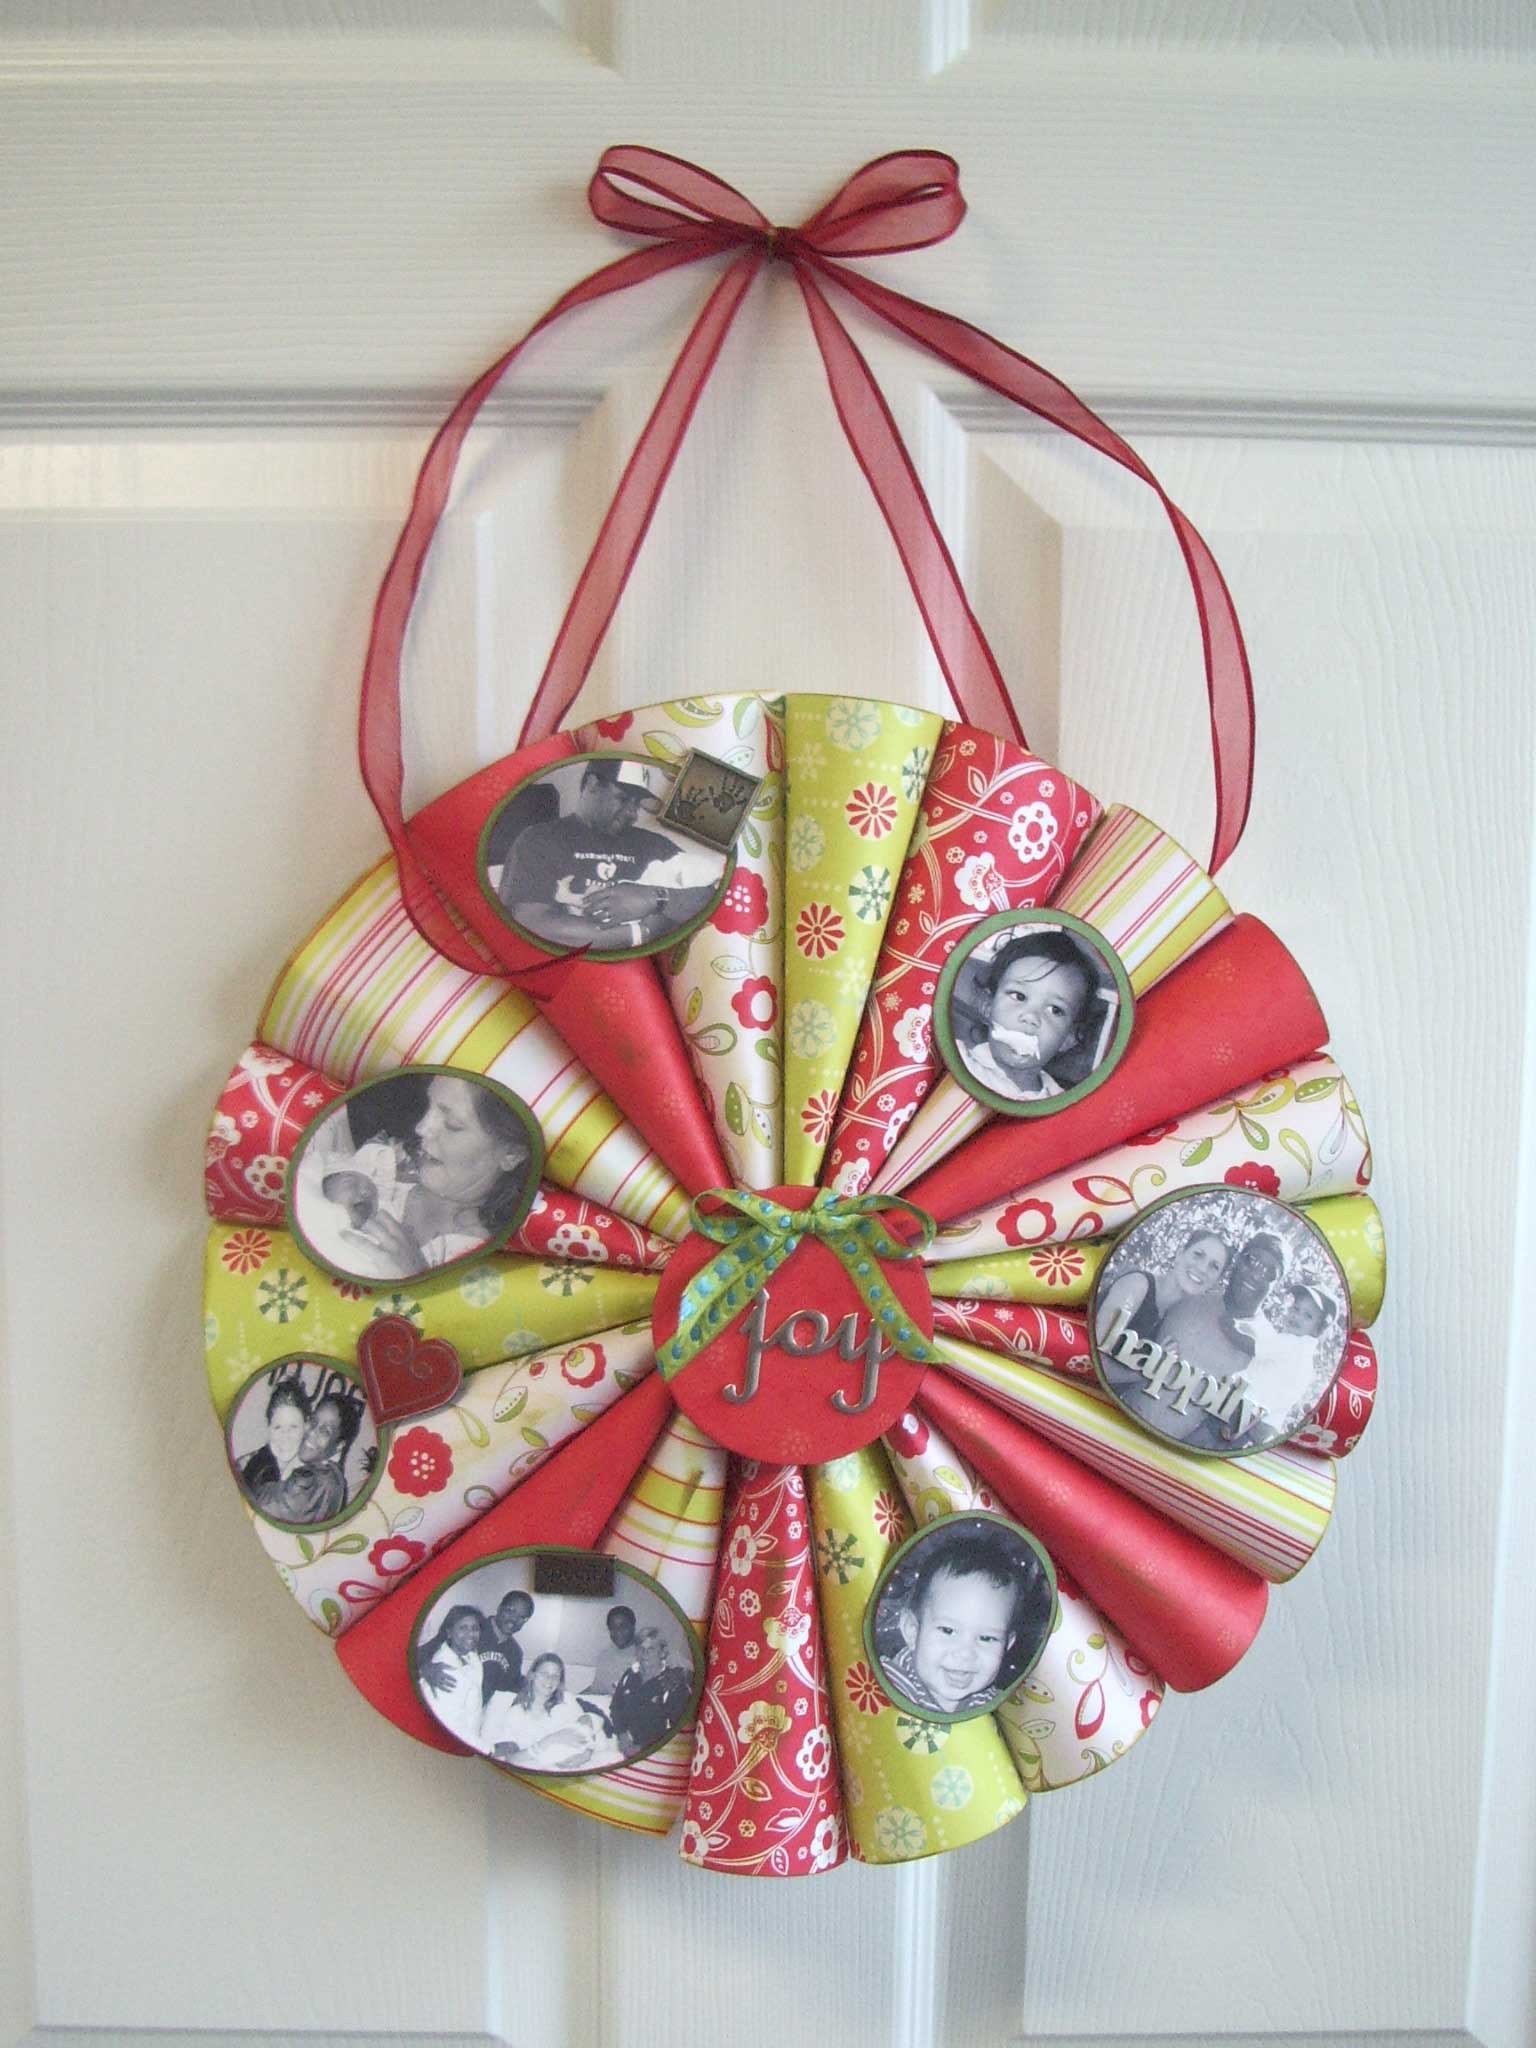  craft wreath diy wreath paper wreath photo wreath scrapbook paper